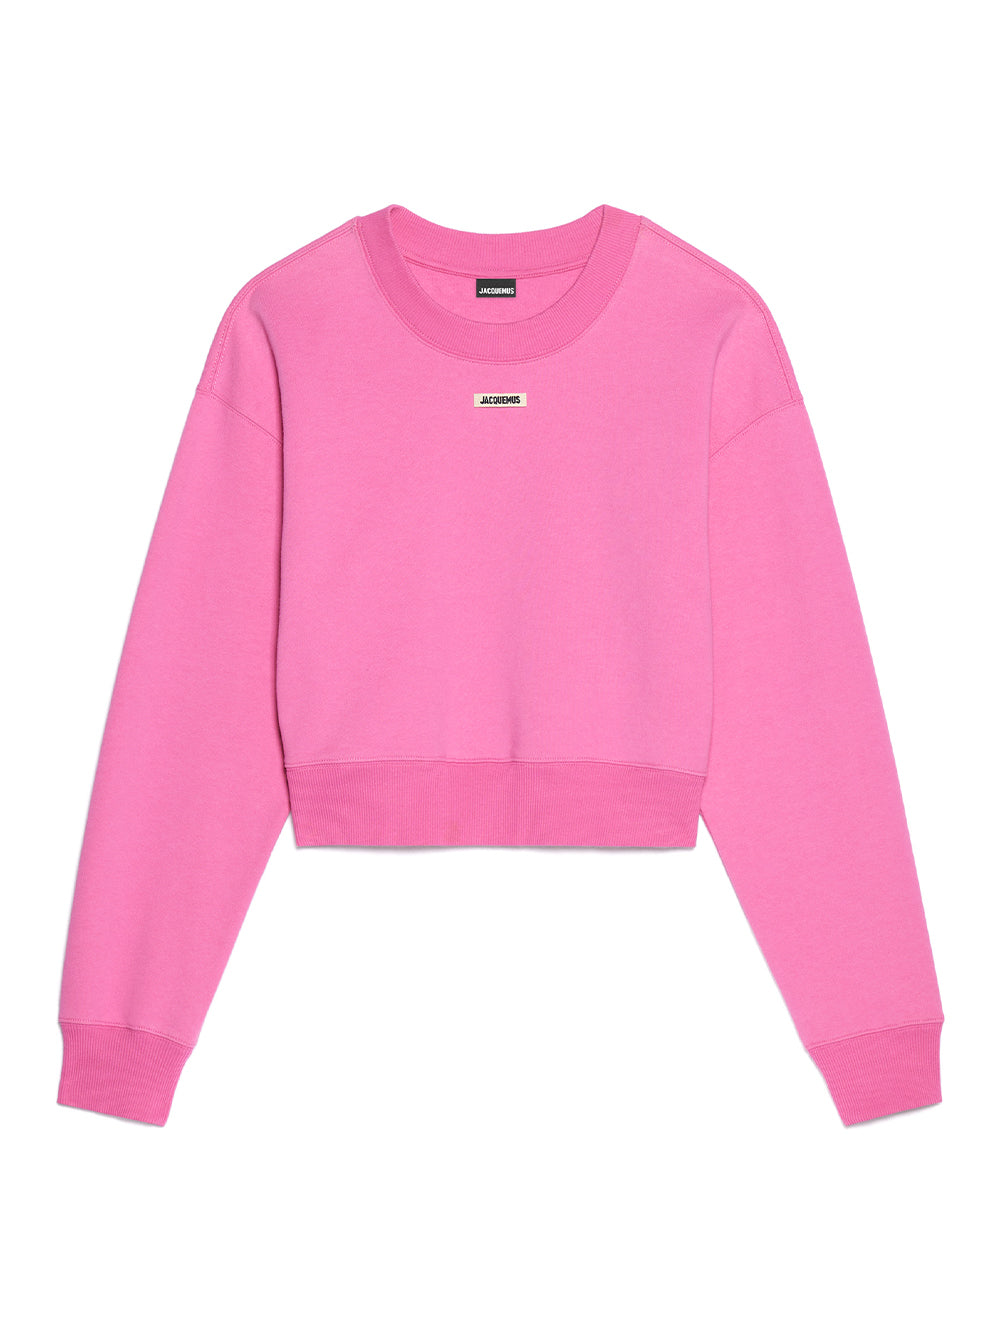 Le Sweatshirt Gros Grain Pink